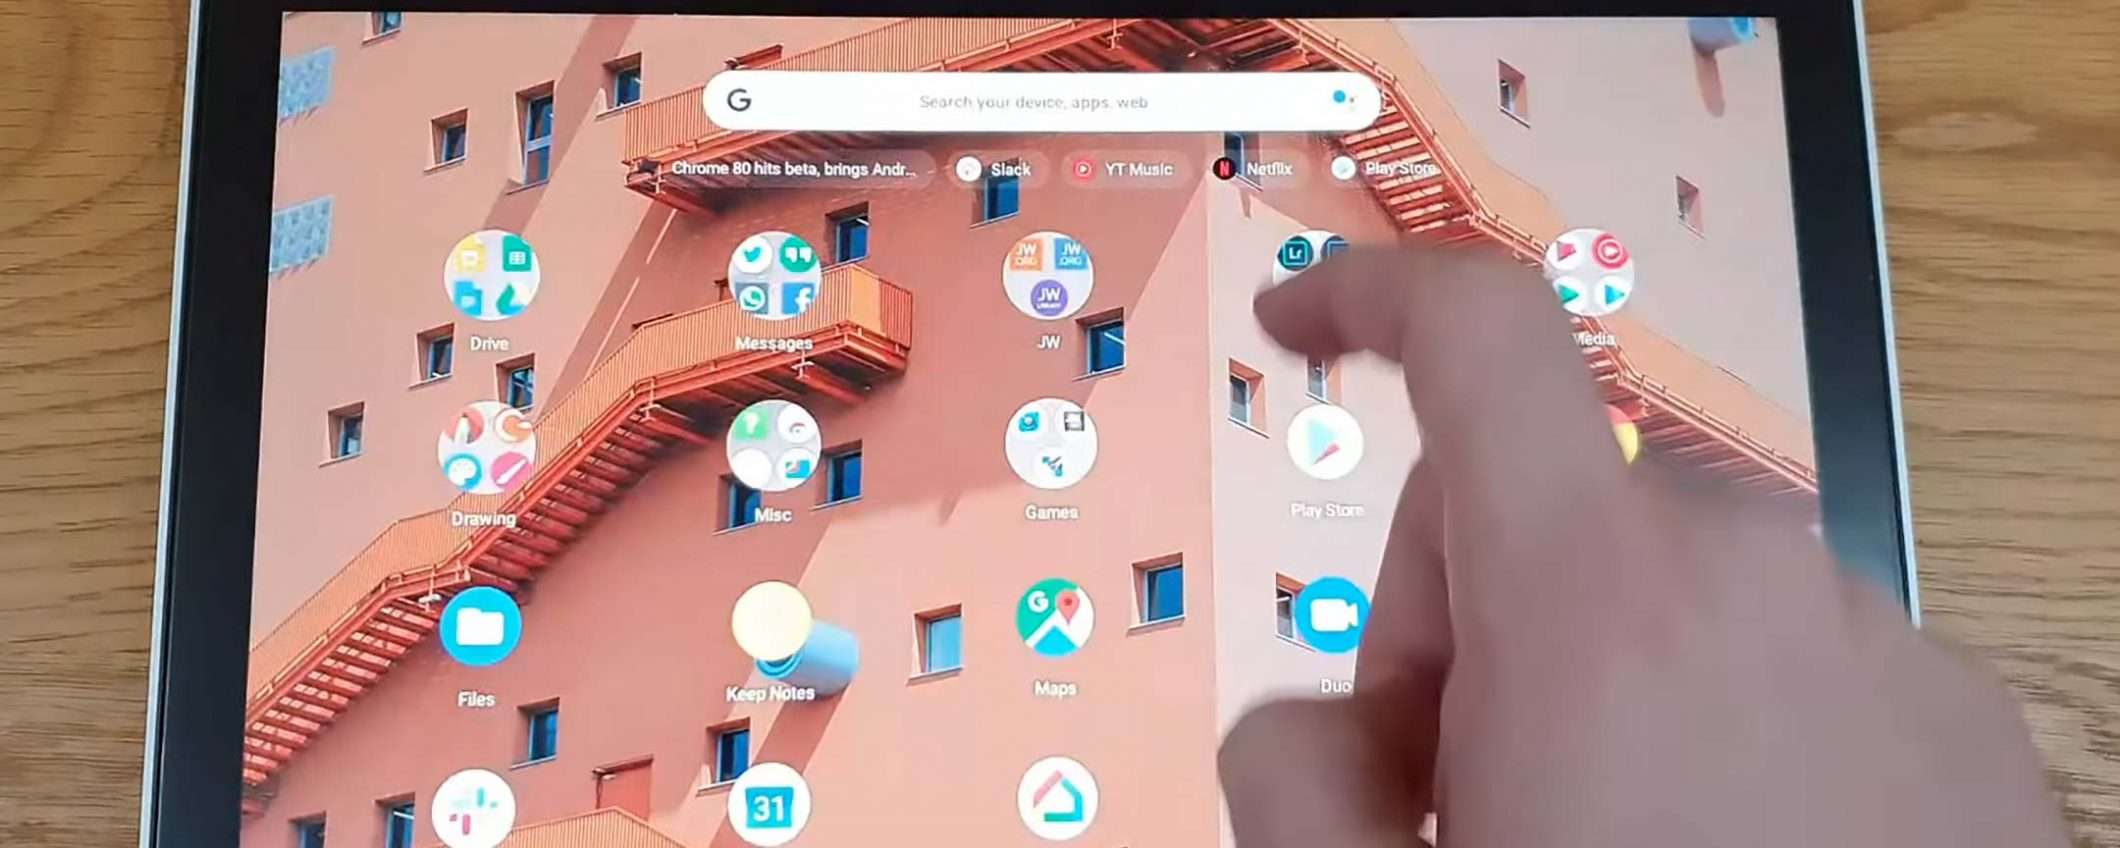 Chrome OS 80: nuove gesture per tablet e ibridi